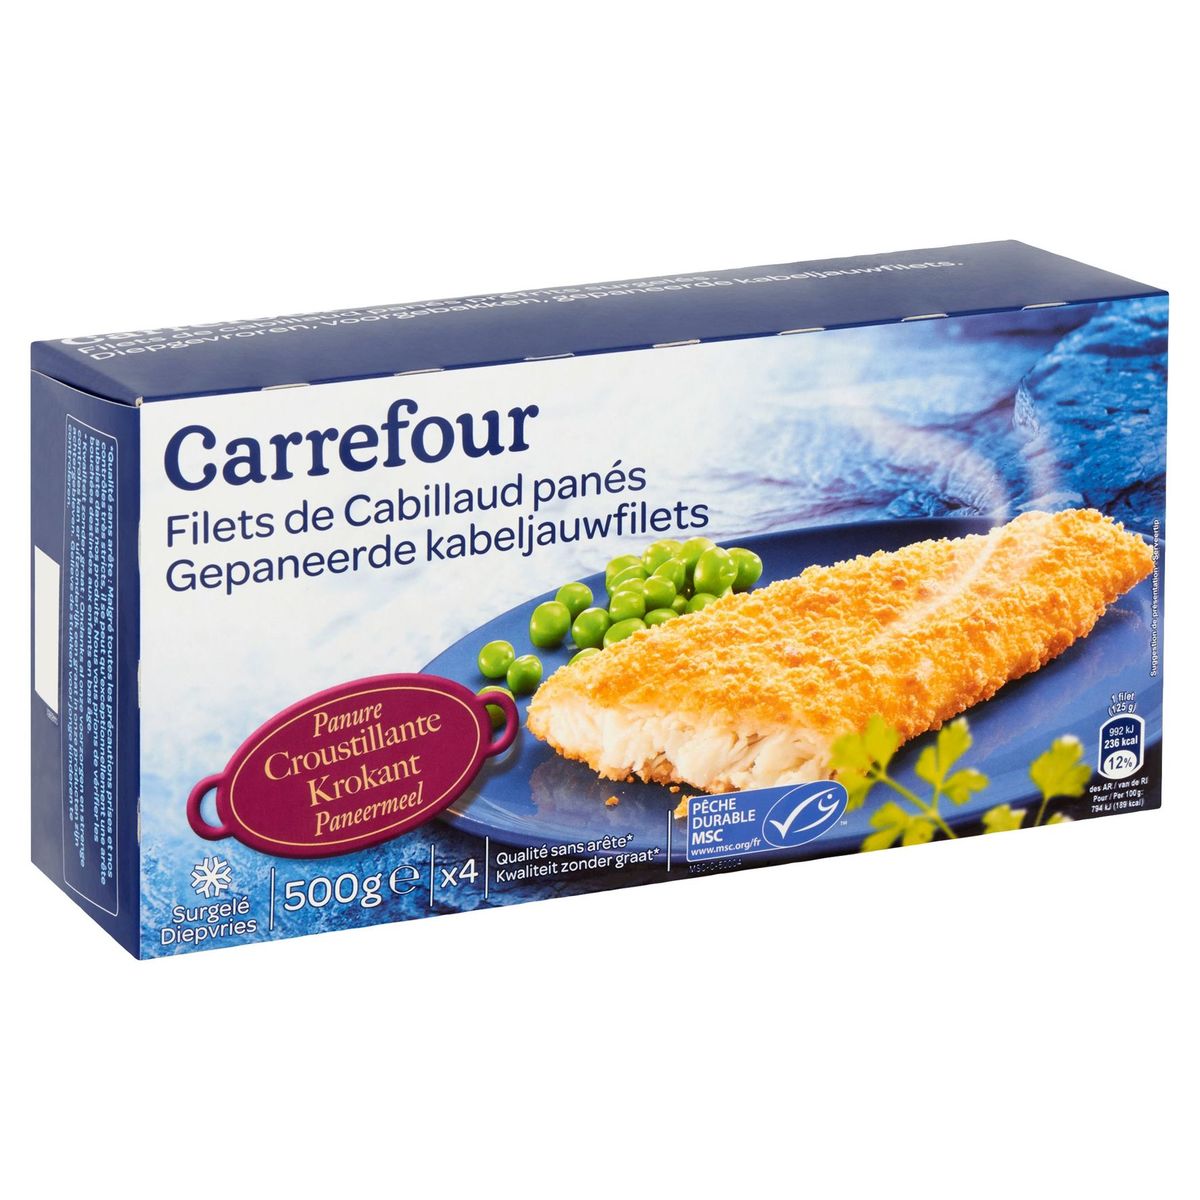 Carrefour Gepaneerde Kabeljauwfilets 4 Stuks 500 g